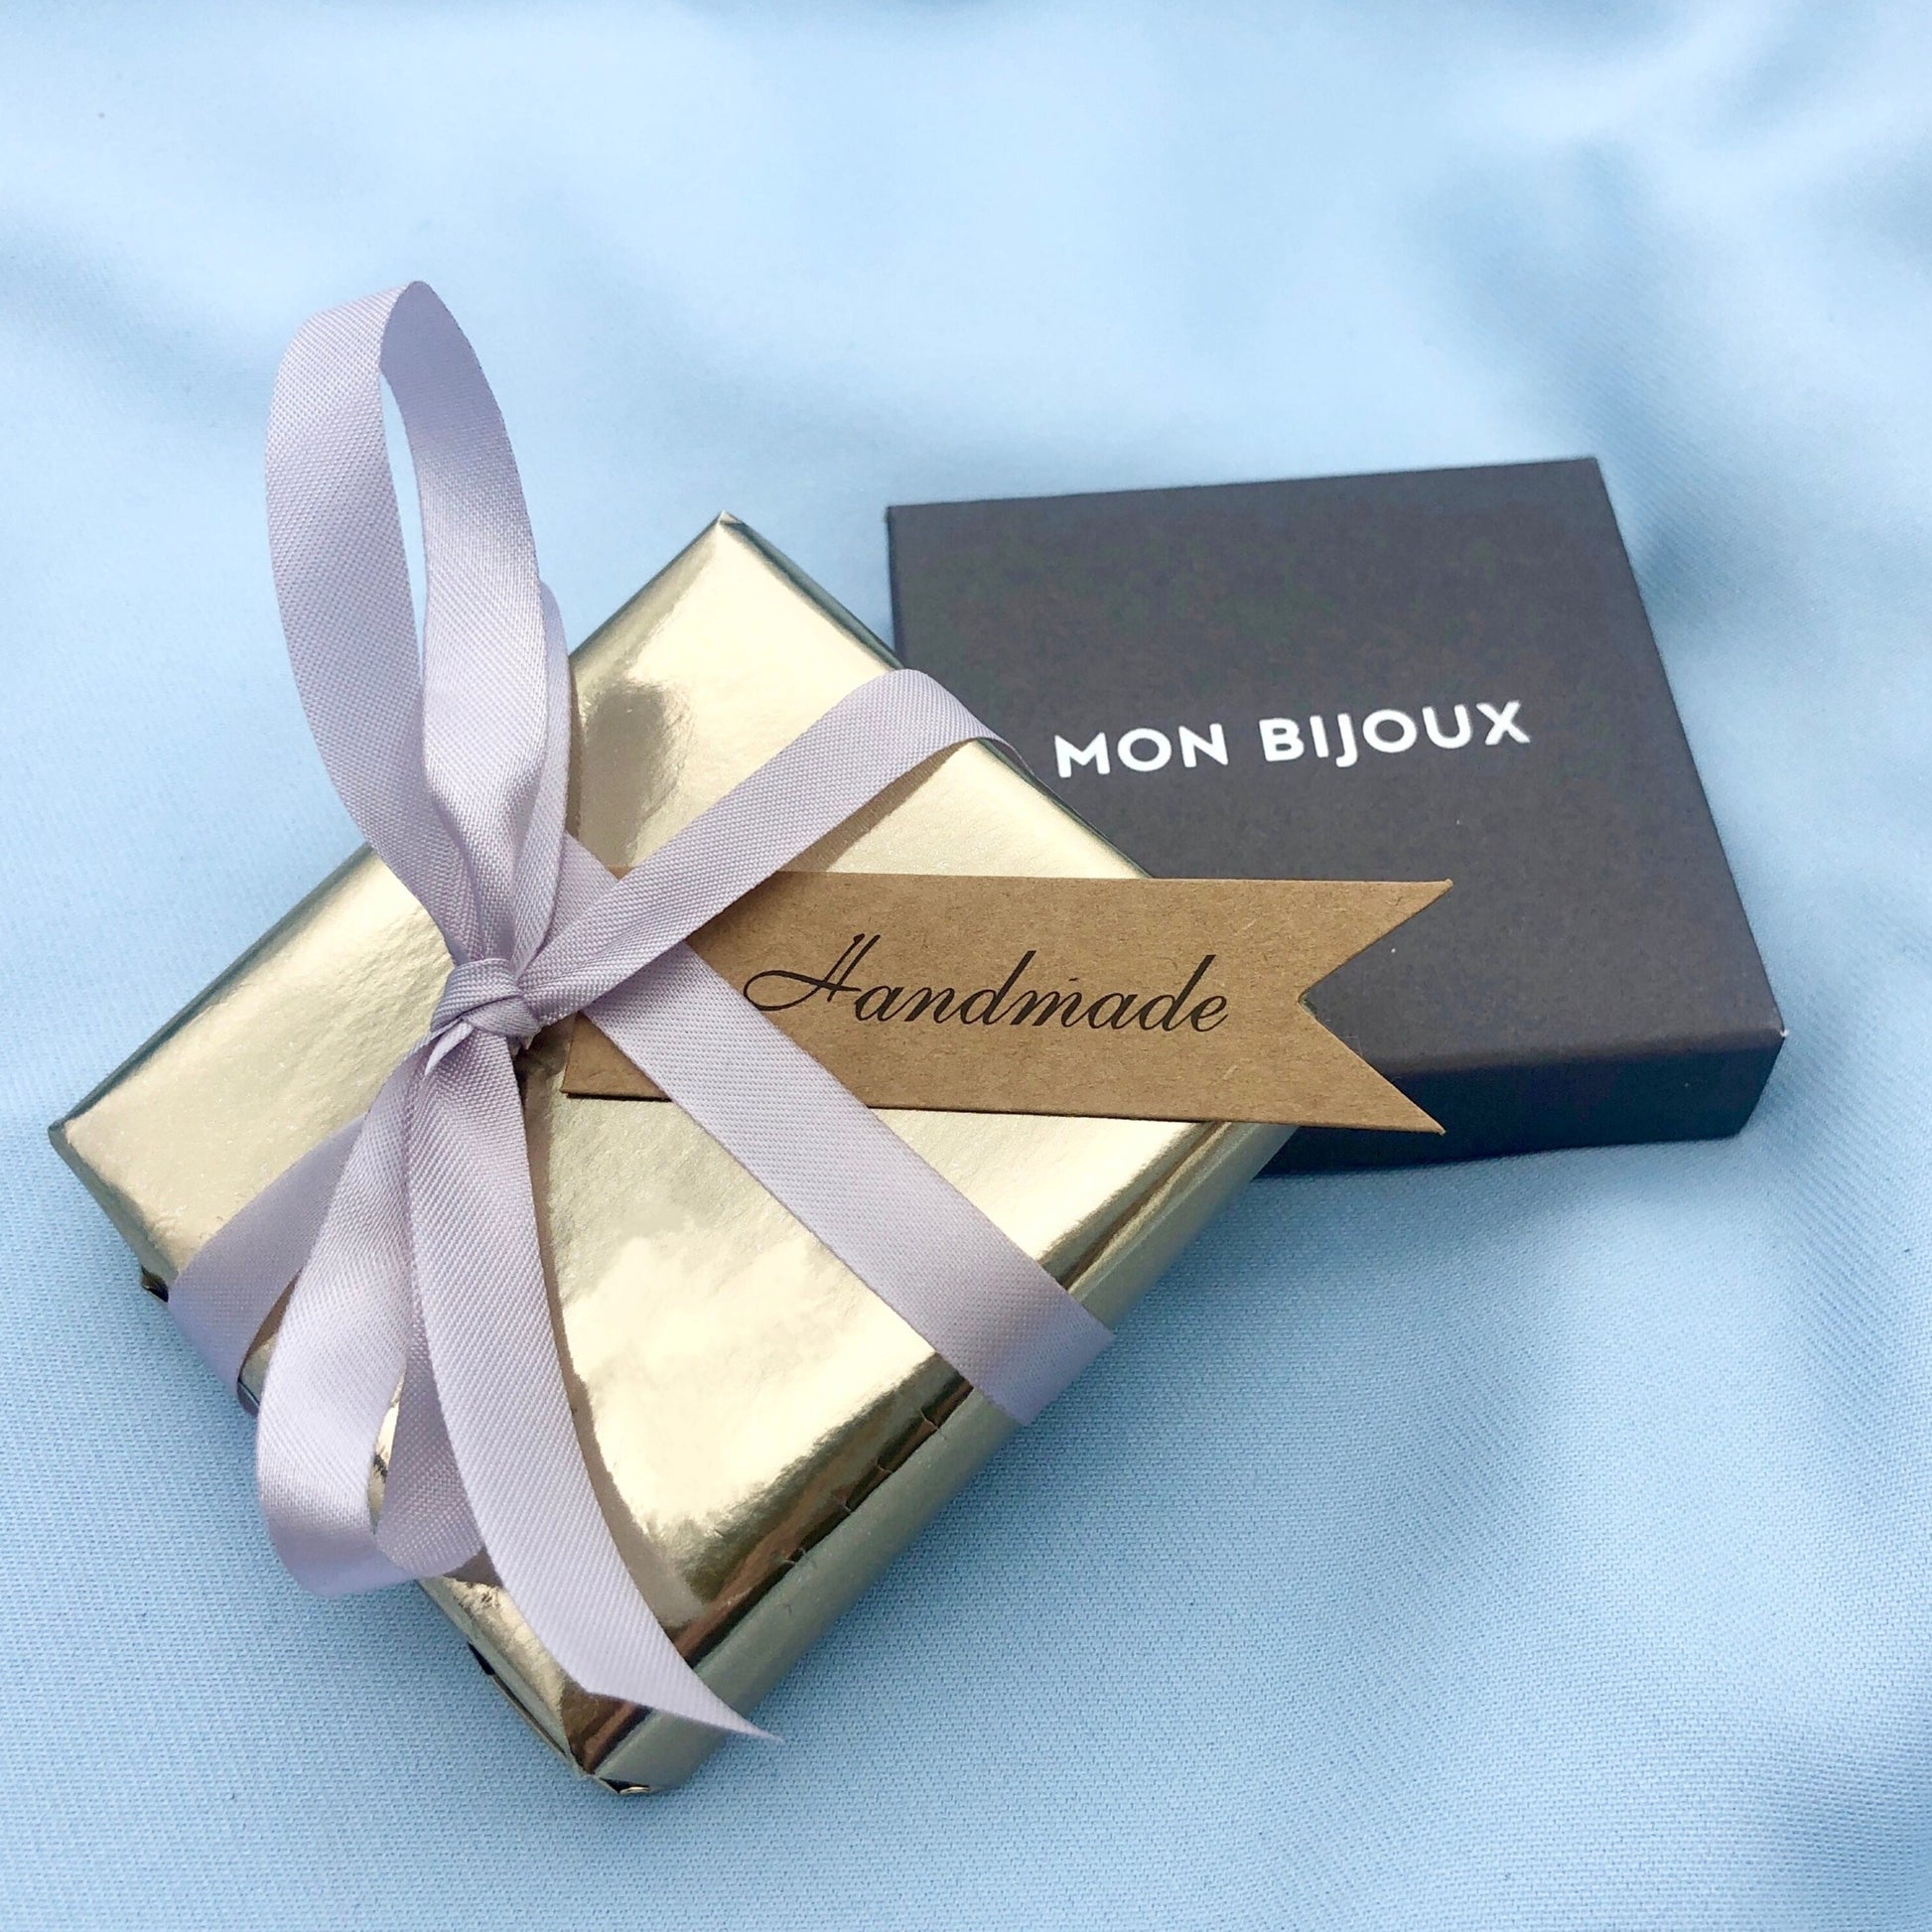 Mon Bijoux eco-friendly packaging